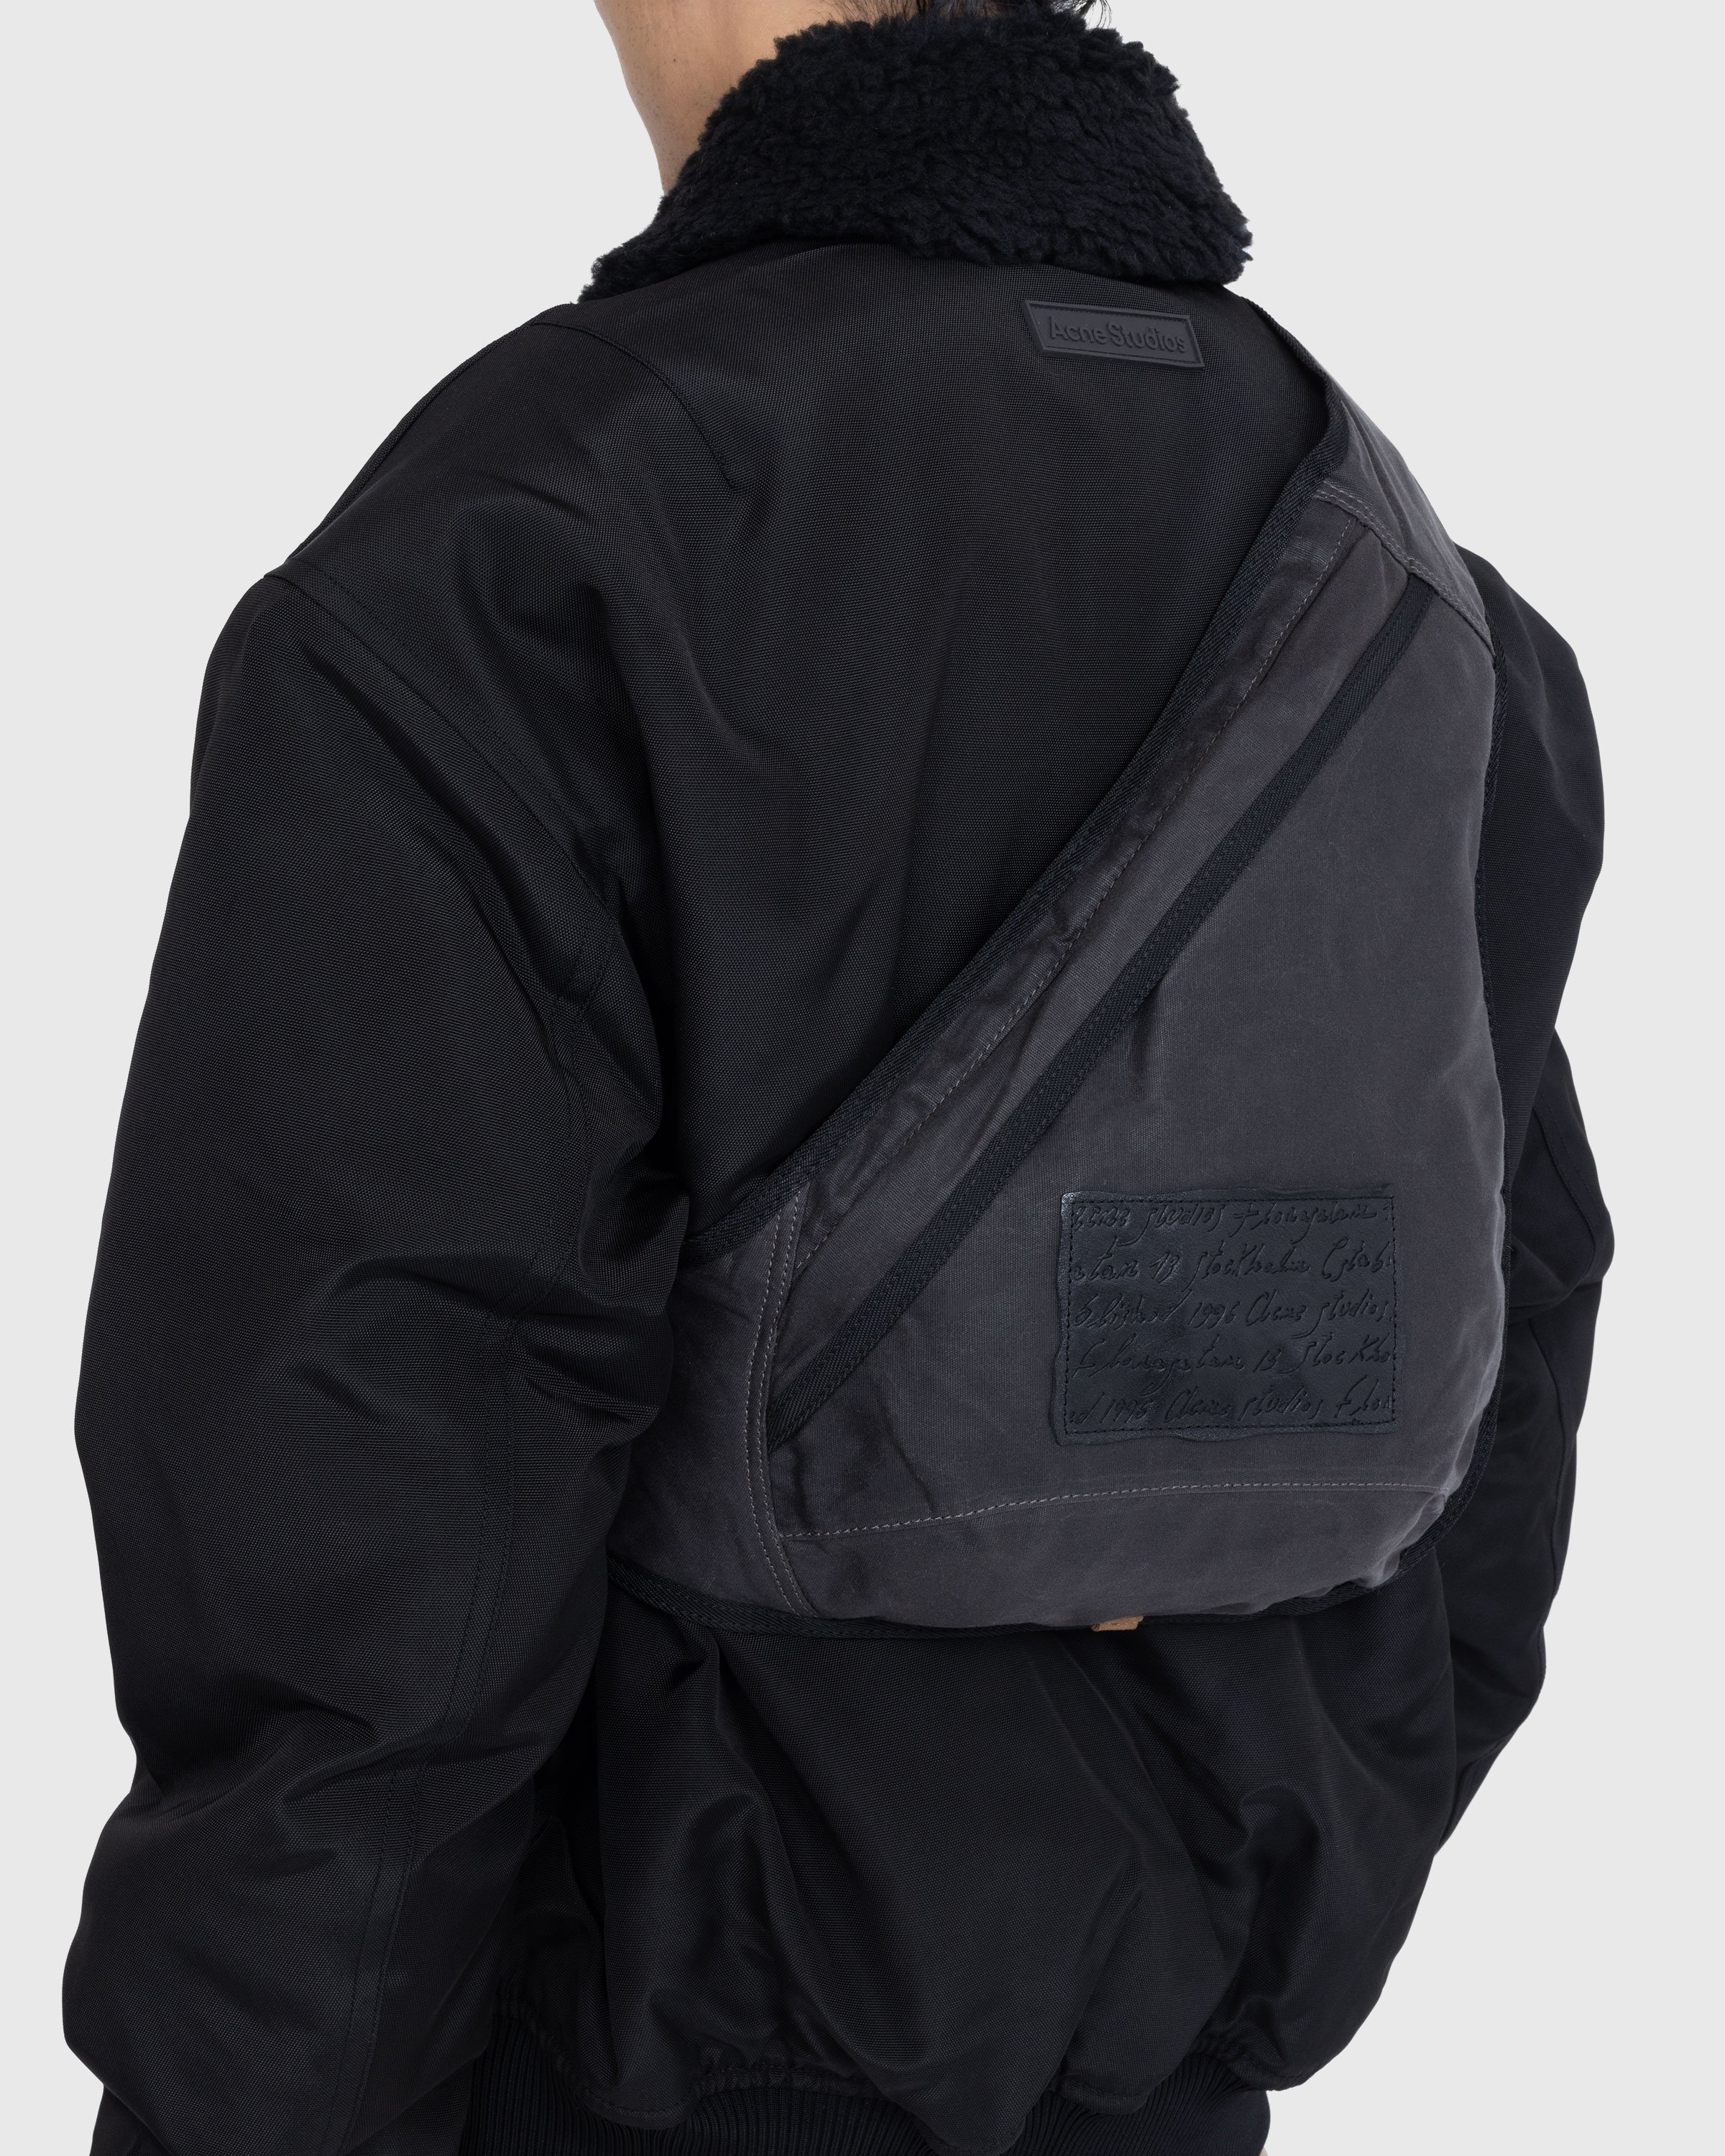 Acne Studios - Sling Backpack Grey/Black - Accessories - Multi - Image 5